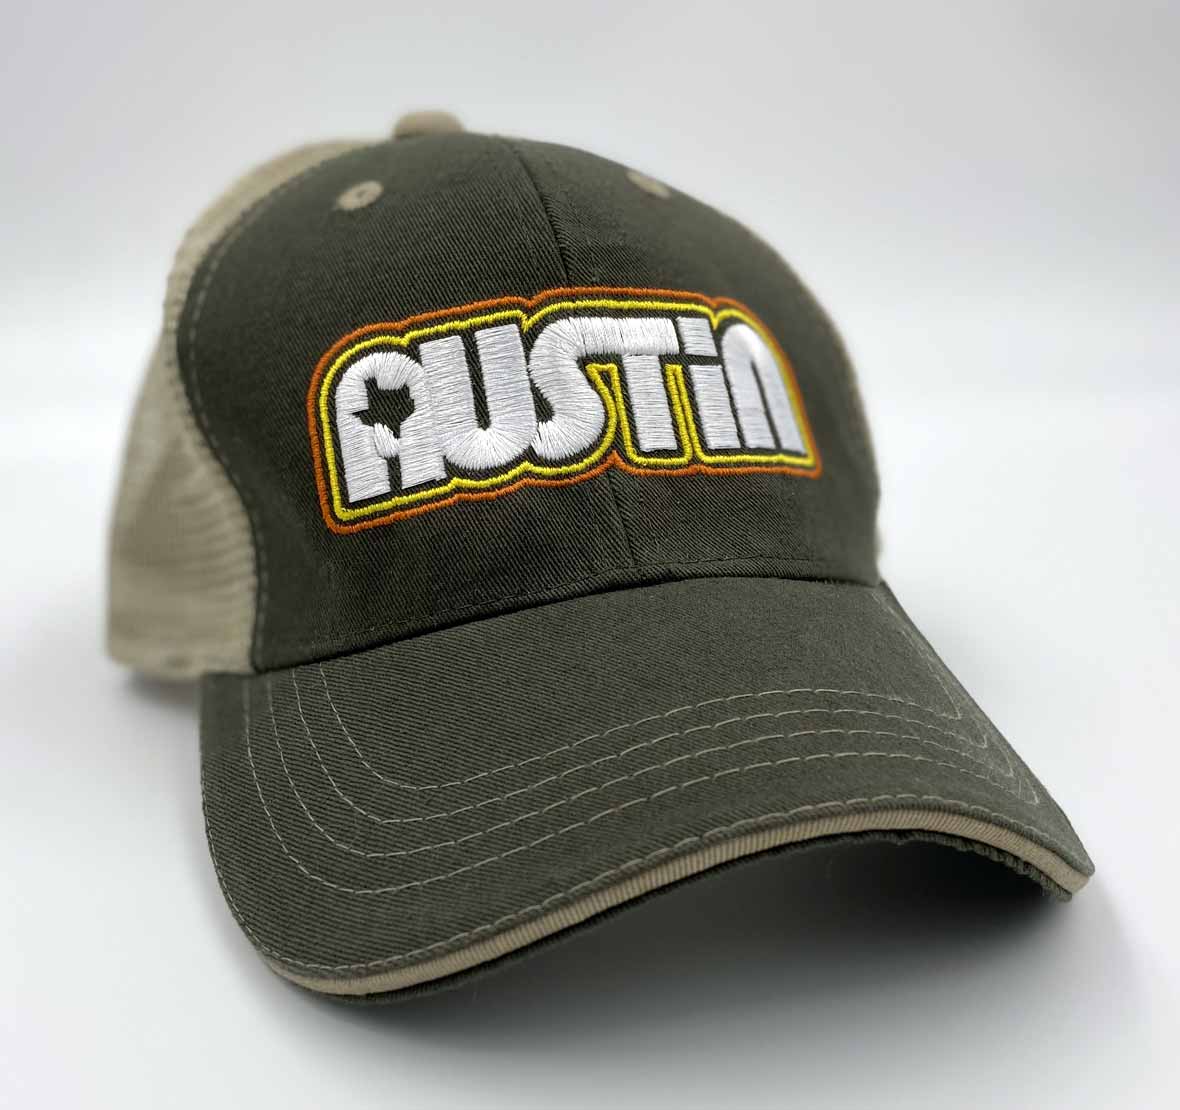 Retro Austin Trucker Cap by Gusto Graphic Tees - Texas cap, texas hat, Austin hat, Austin Texas 